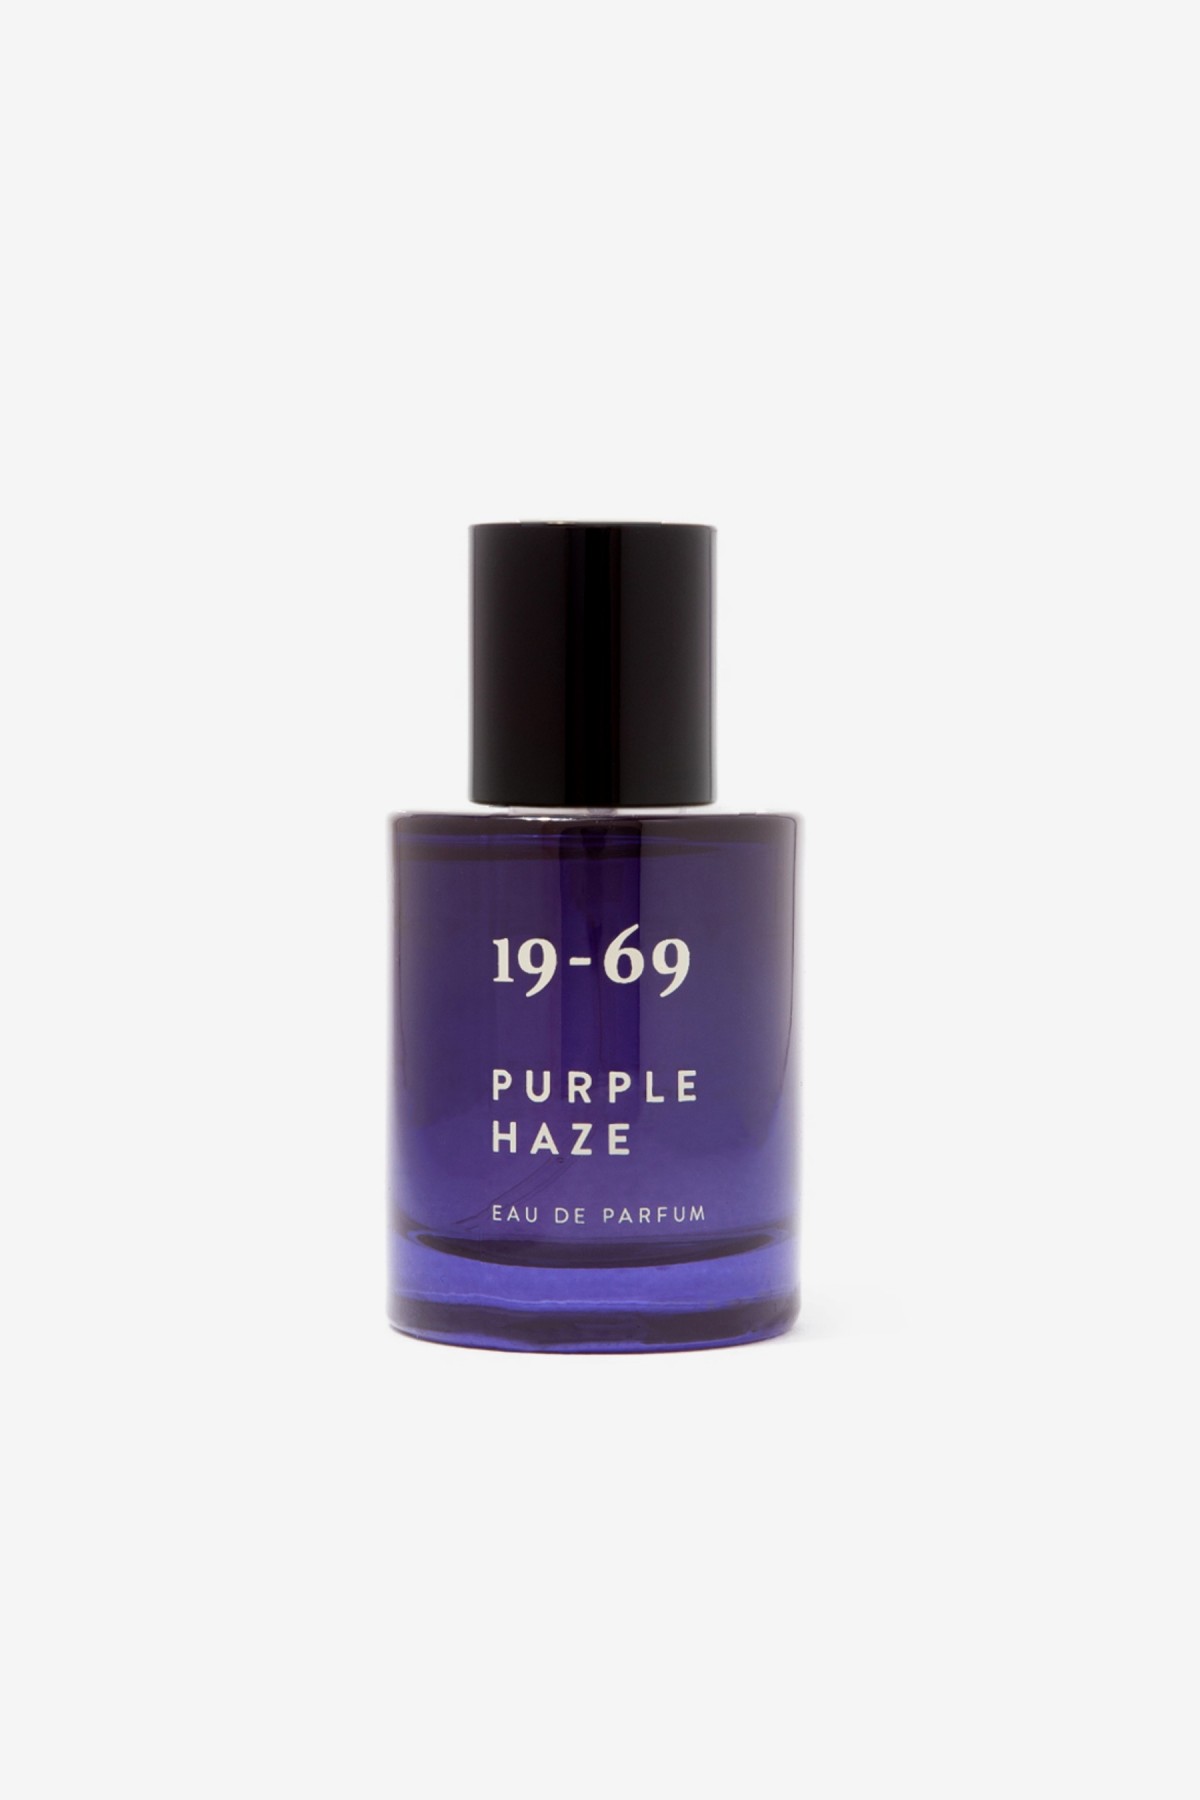 19-69 Purple Haze Eau de Parfum in 30ml